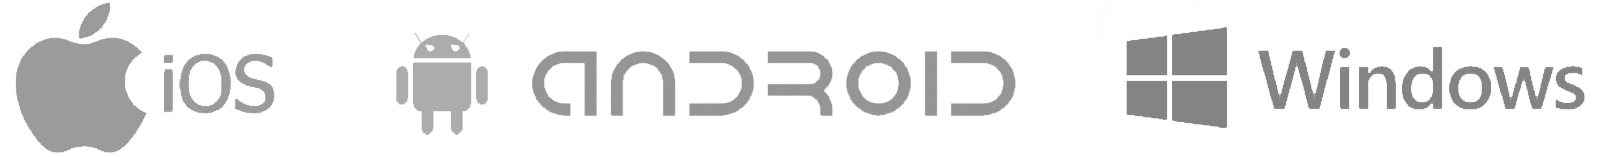 mobile OS logos